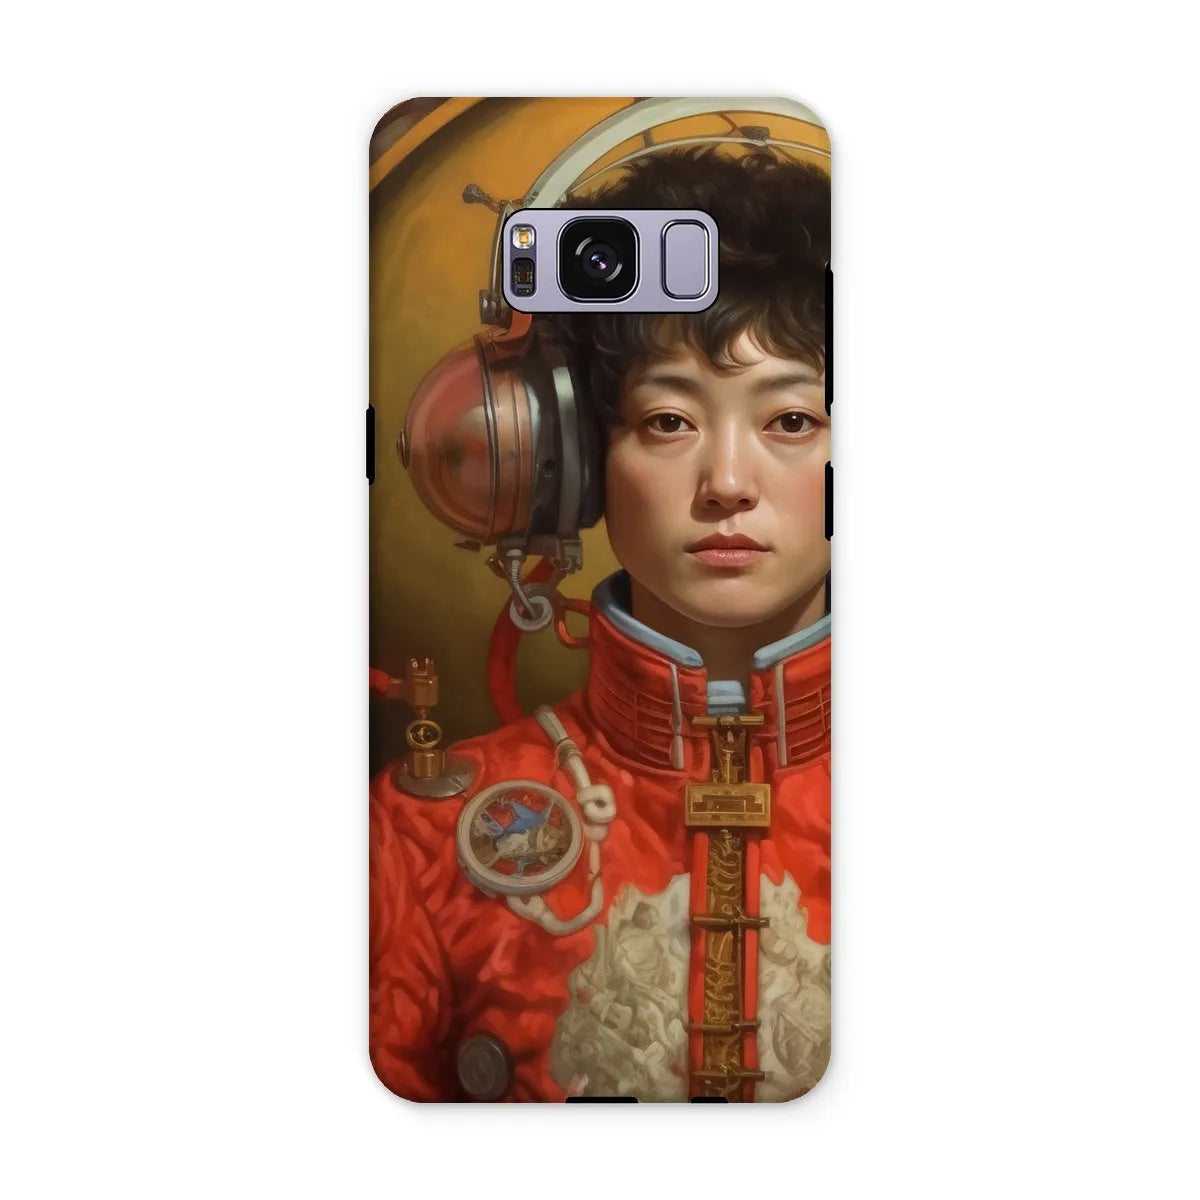 Mùchén The Gay Astronaut - Lgbtq Art Phone Case - Samsung Galaxy S8 Plus / Matte - Mobile Phone Cases - Aesthetic Art